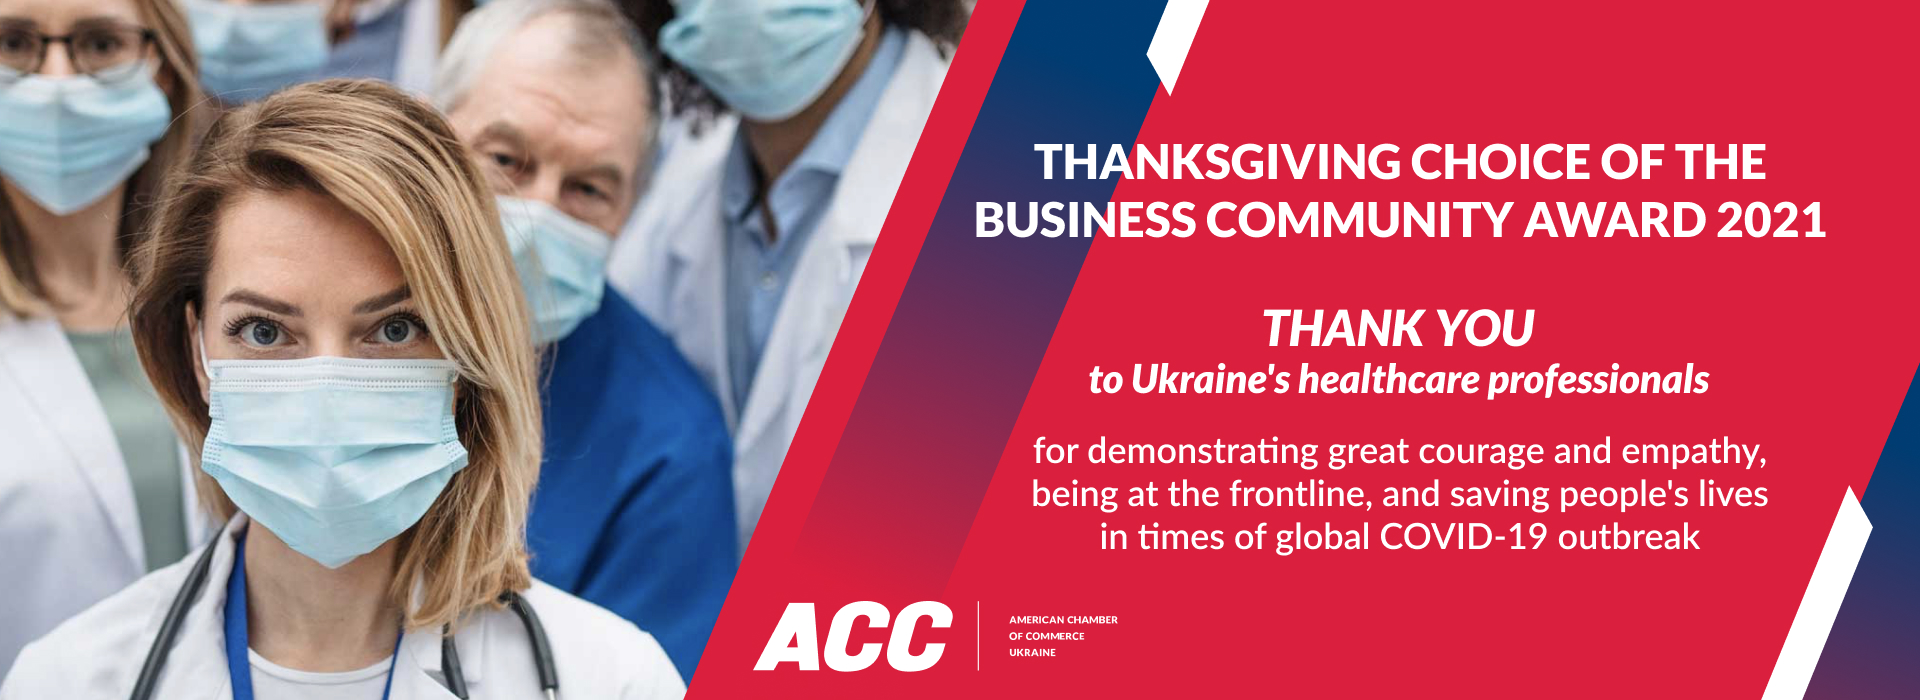 Американська торговельна палата в Україні вручила нагороду до Дня Подяки 2021 українським медичним працівникам